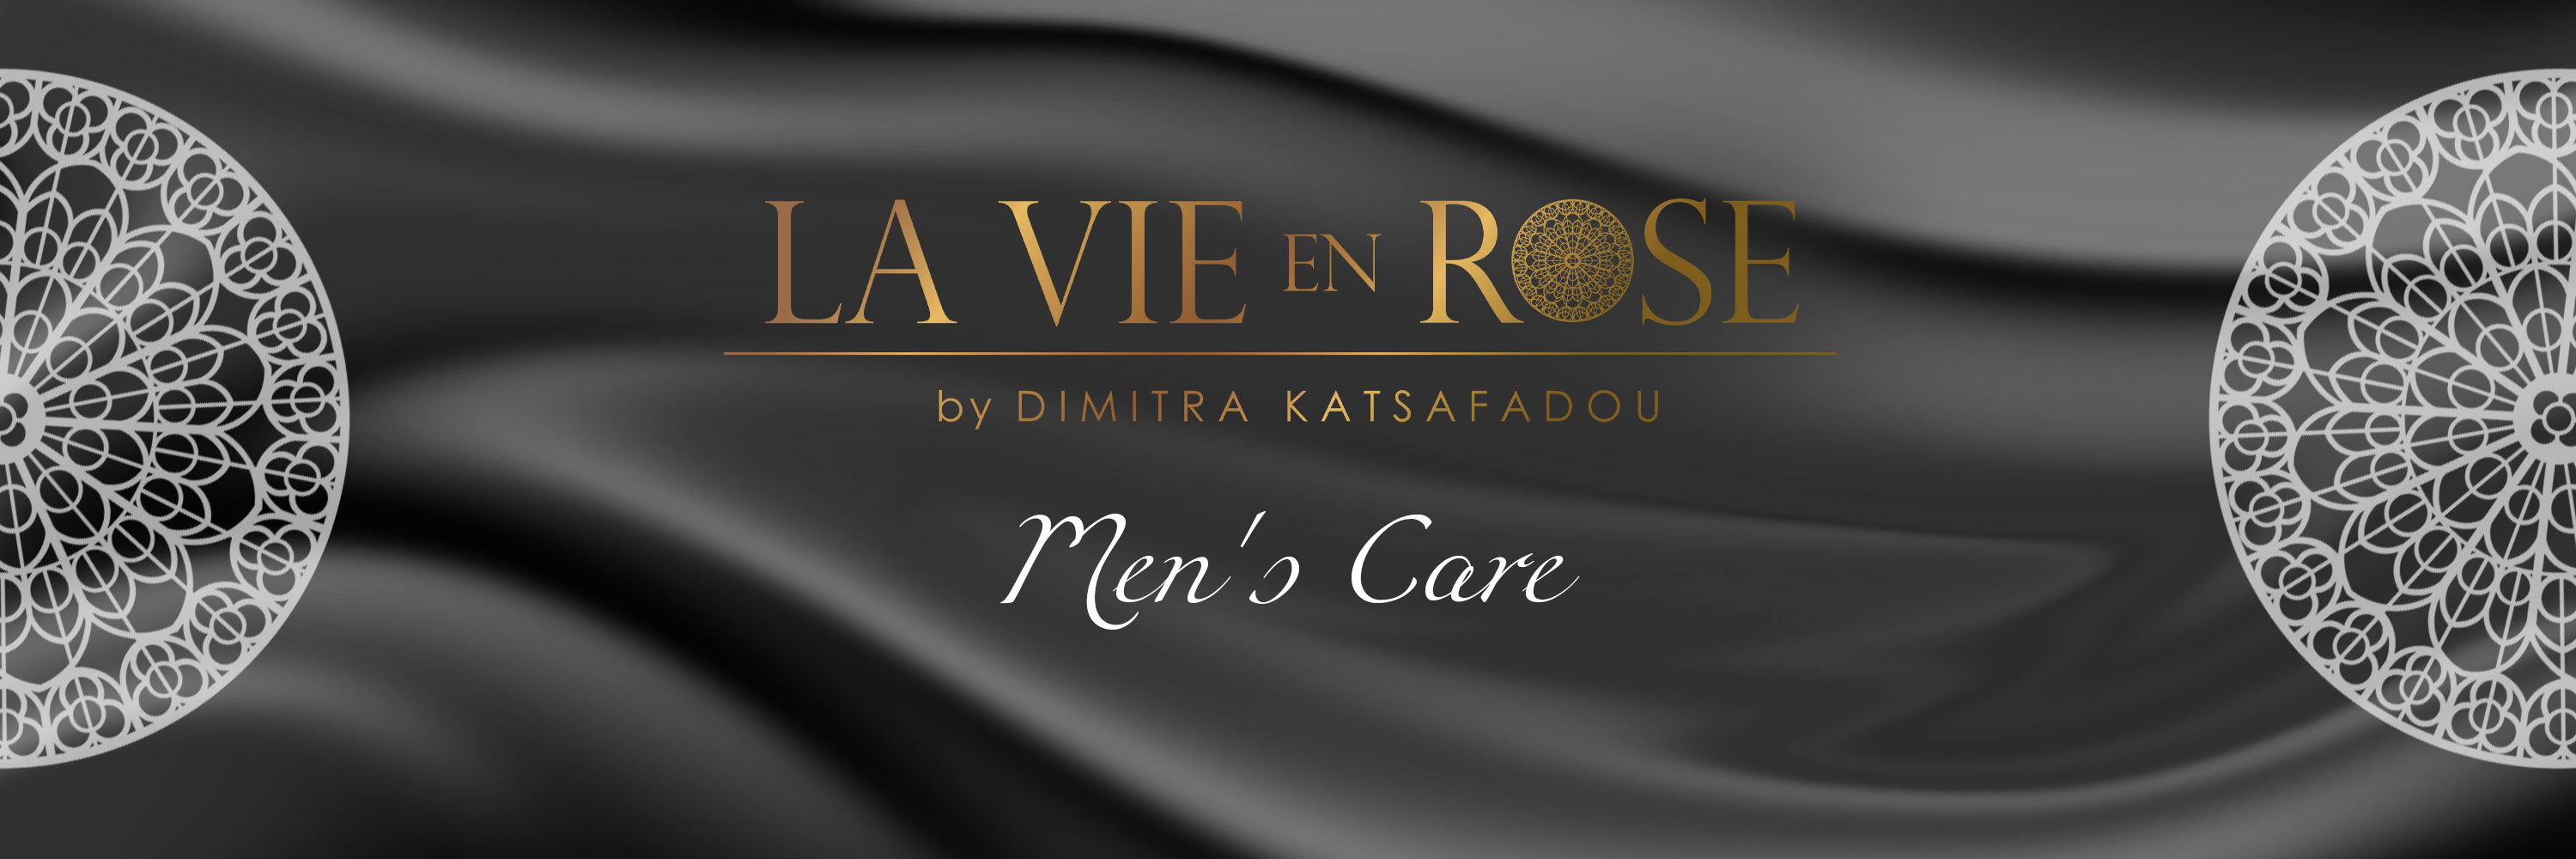 Men's Care La Vie en Rose